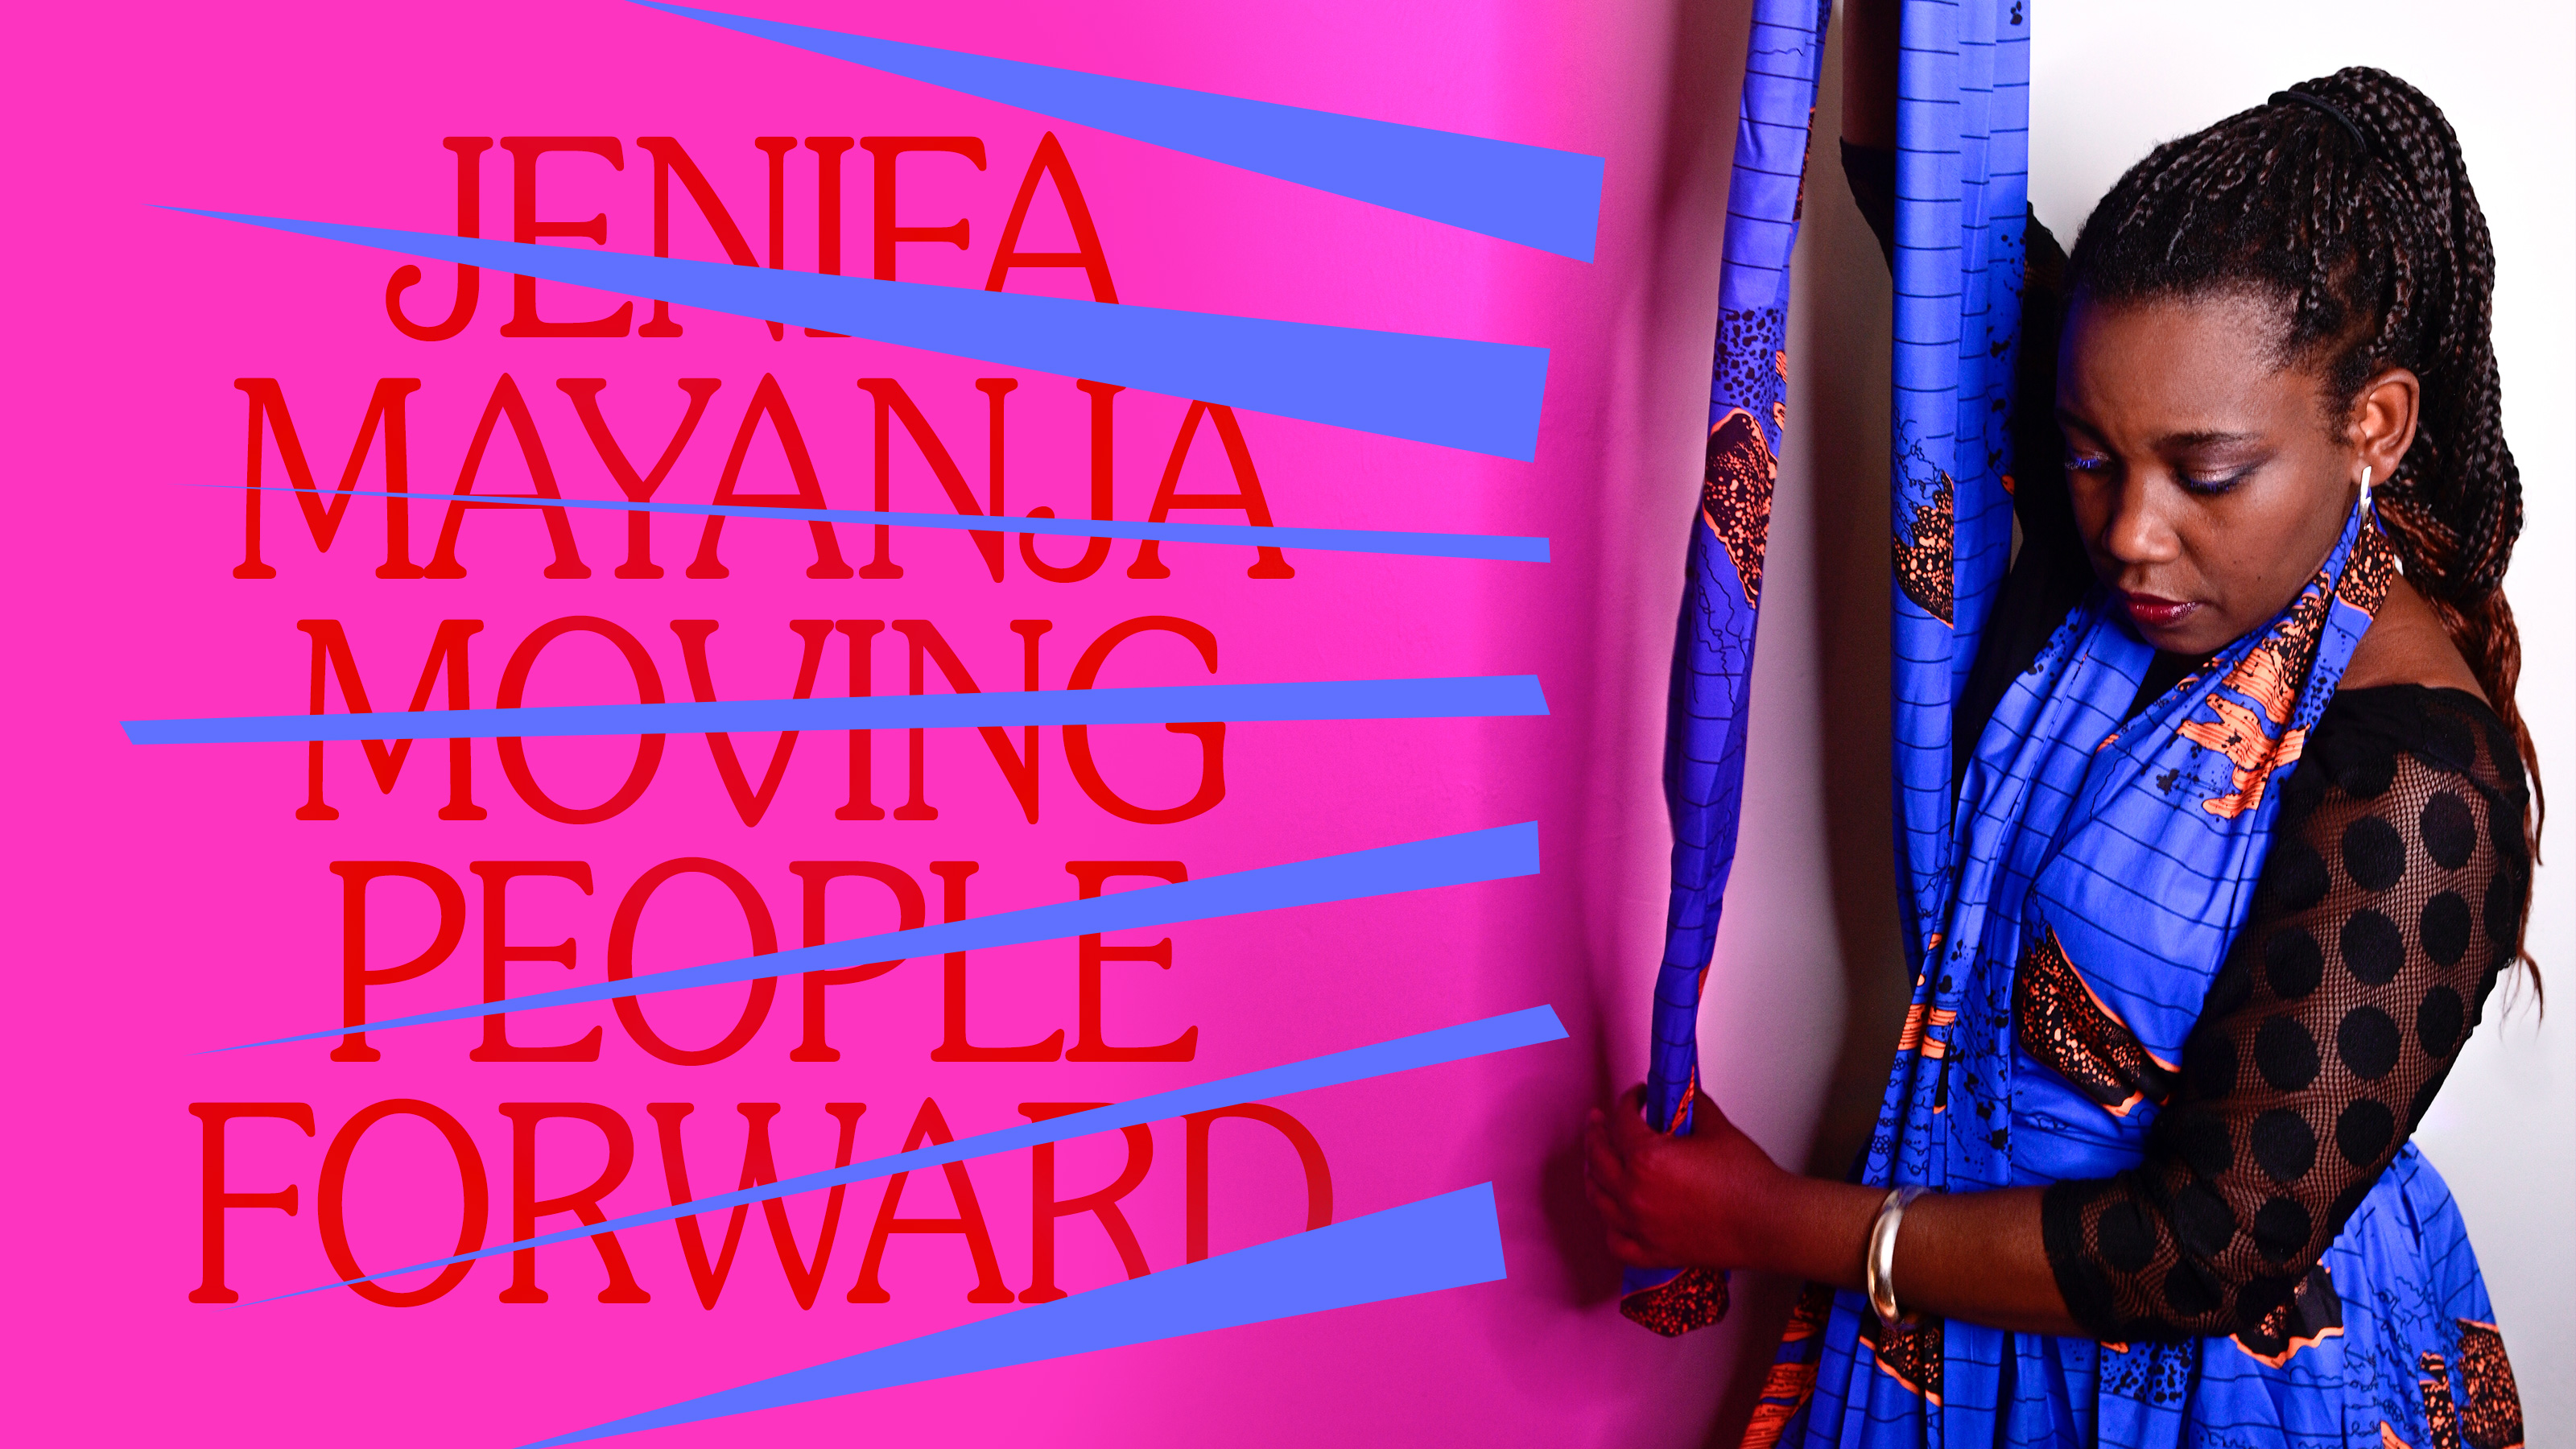 Jenifa Mayanja: Moving People Forward